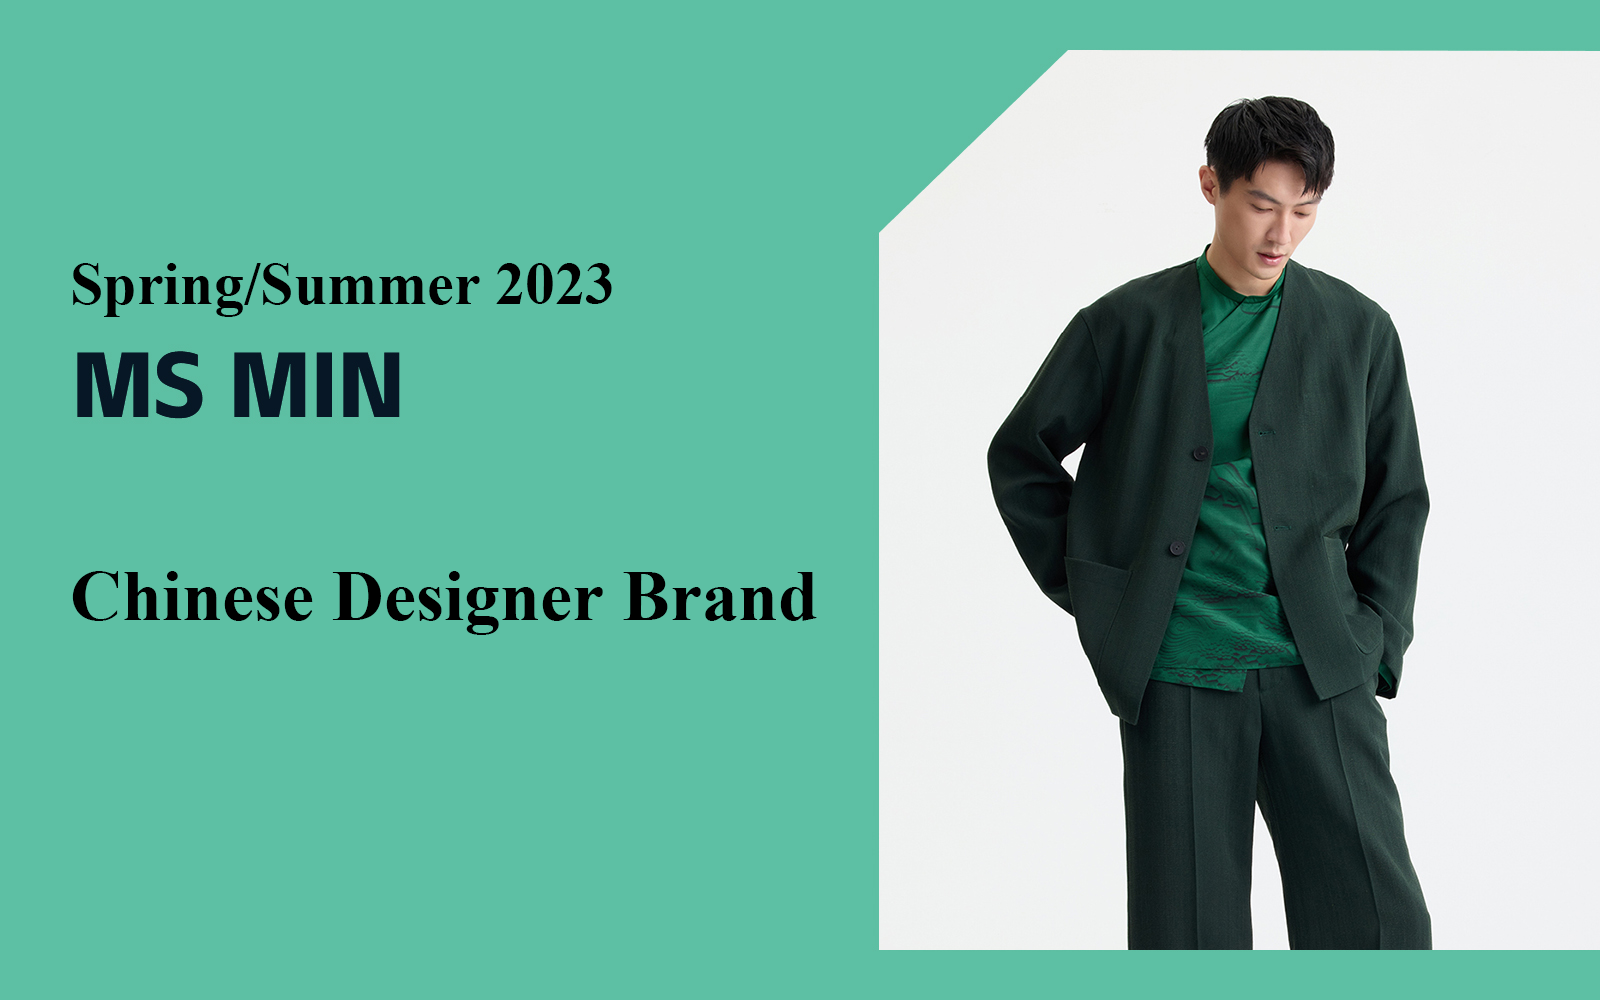 Minimalist Chinese Fashion -- The Analysis of Ms MIN The Menswear Designer Brand